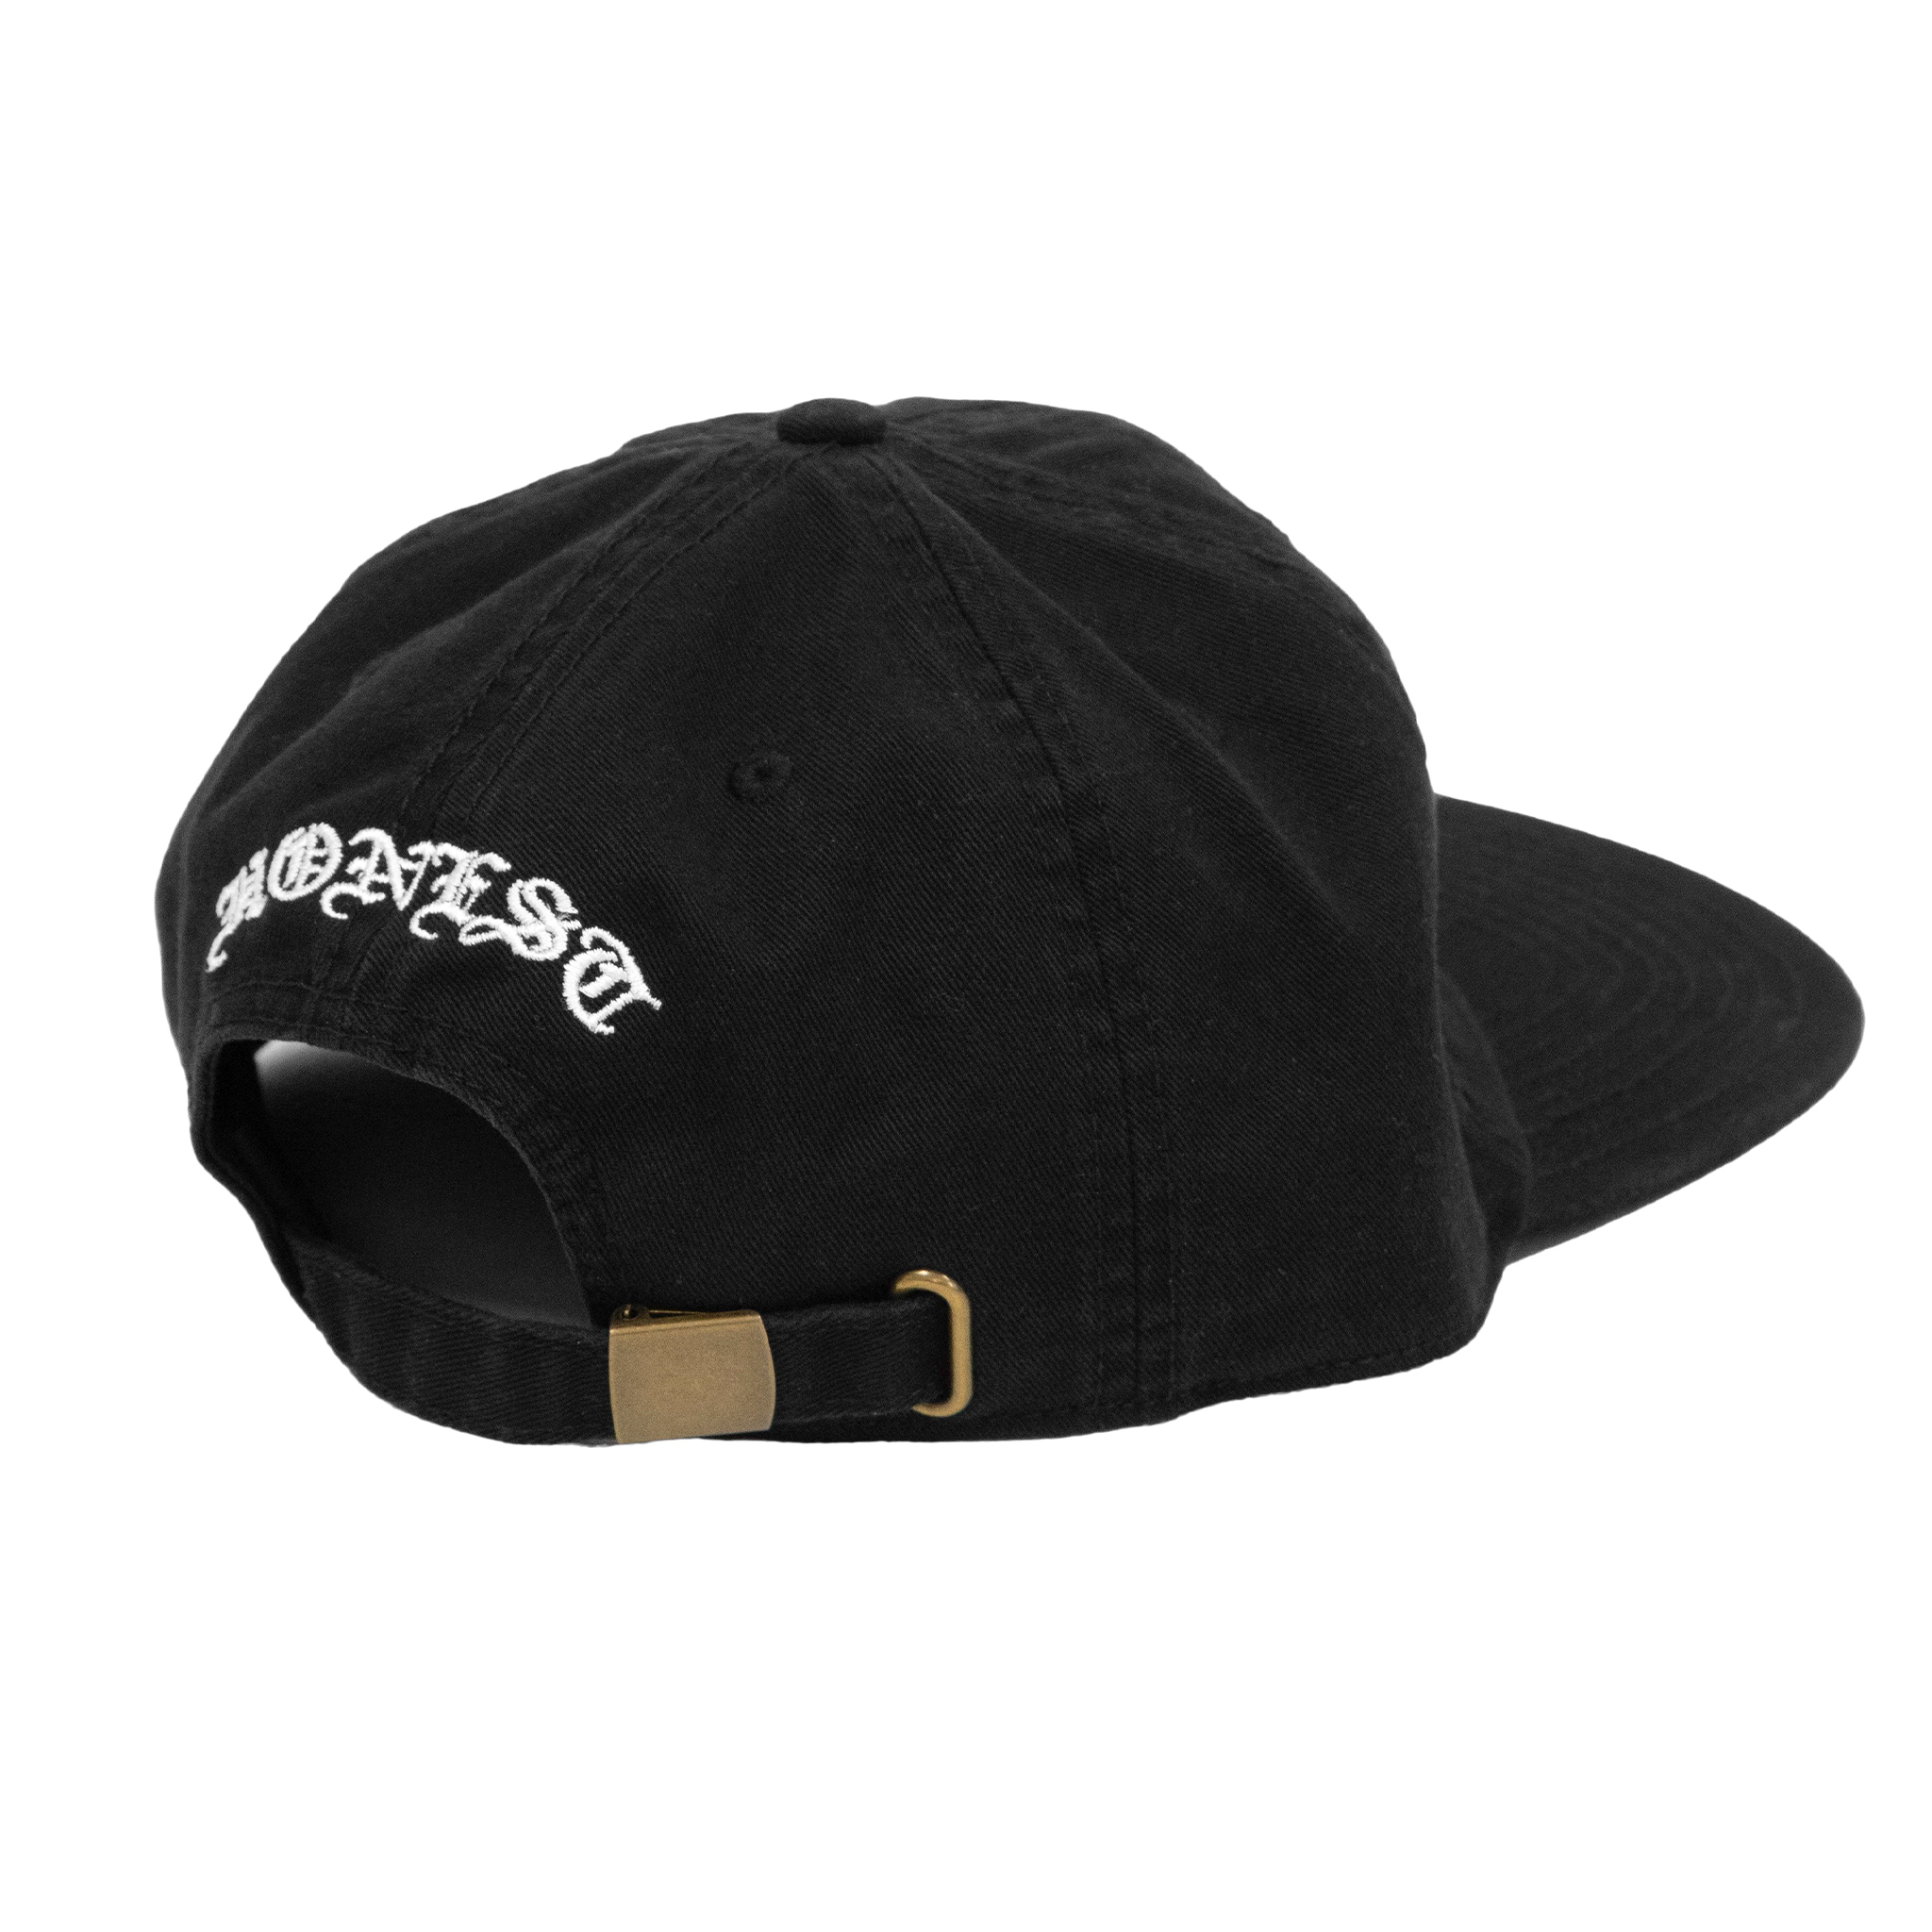 H-STAR CAP (BLACK)